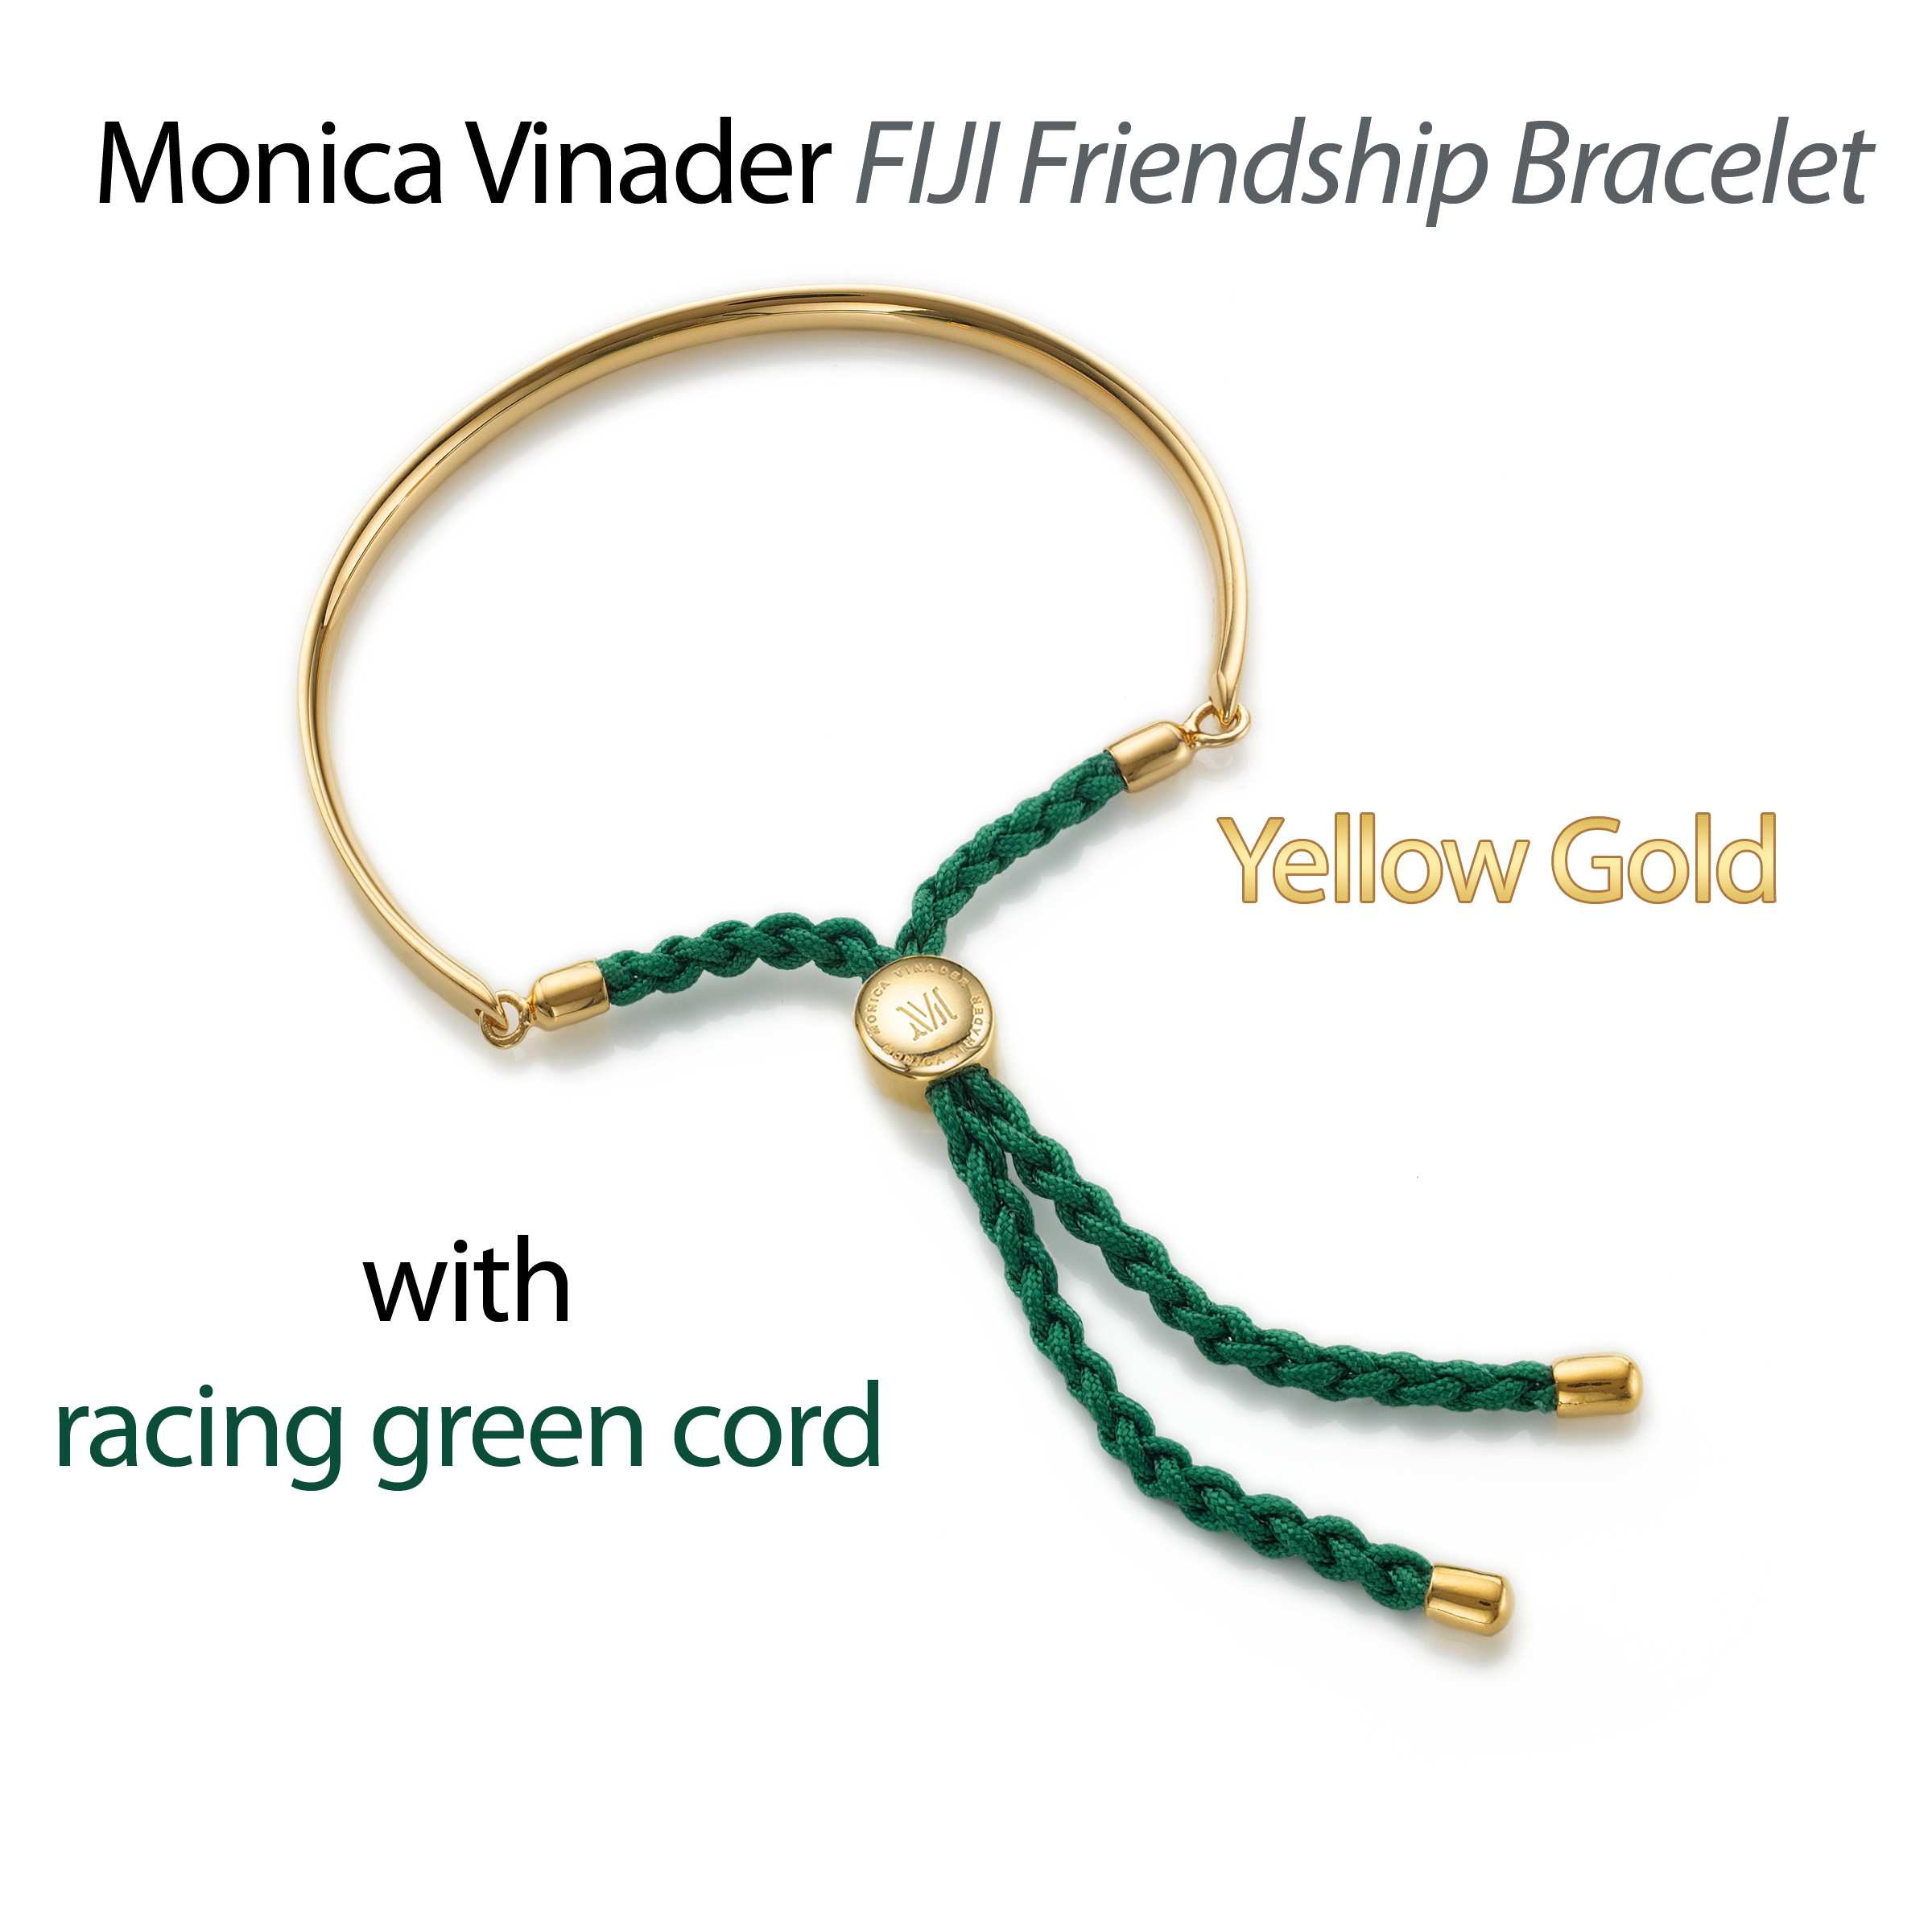 Monica Vinader Fiji friendship bracelet yellow gold with racing green cord